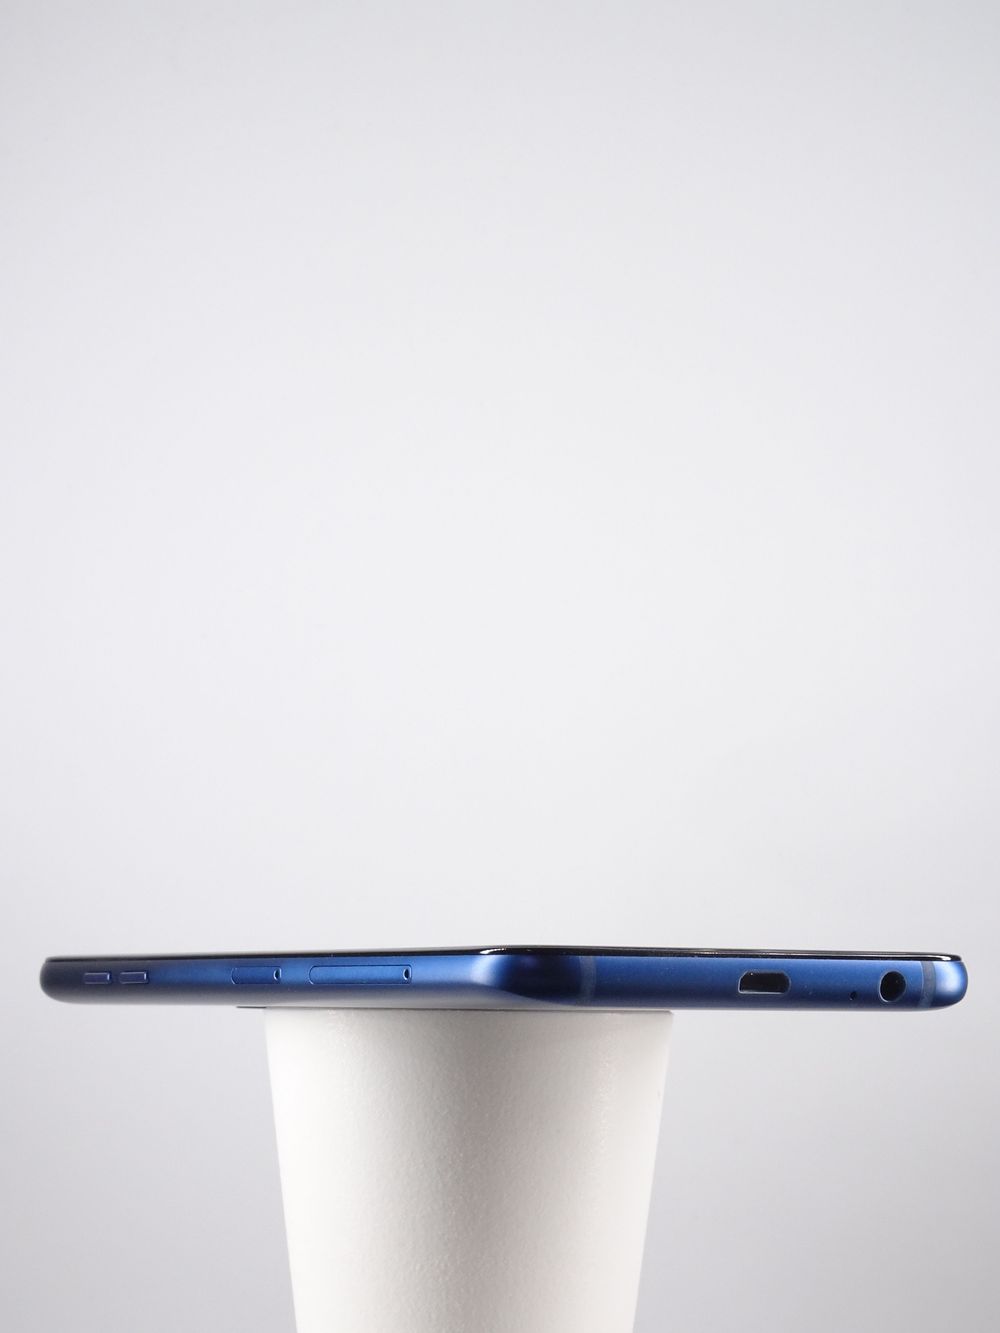 Telefon mobil Samsung Galaxy A6 Plus (2018) Dual Sim, Blue, 32 GB,  Ca Nou